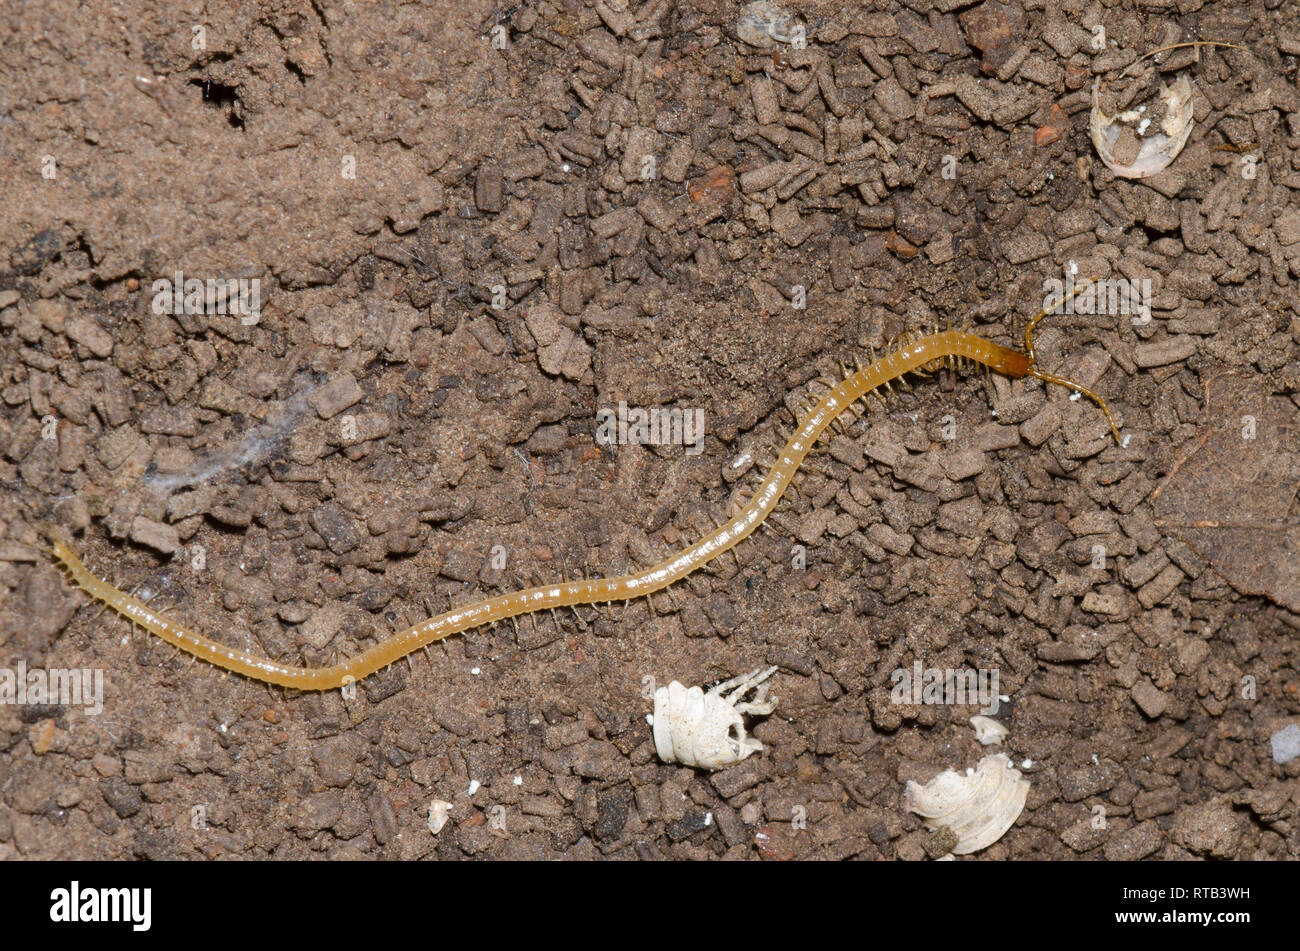 Soil Centipede, Order Geophilomorpha Stock Photo